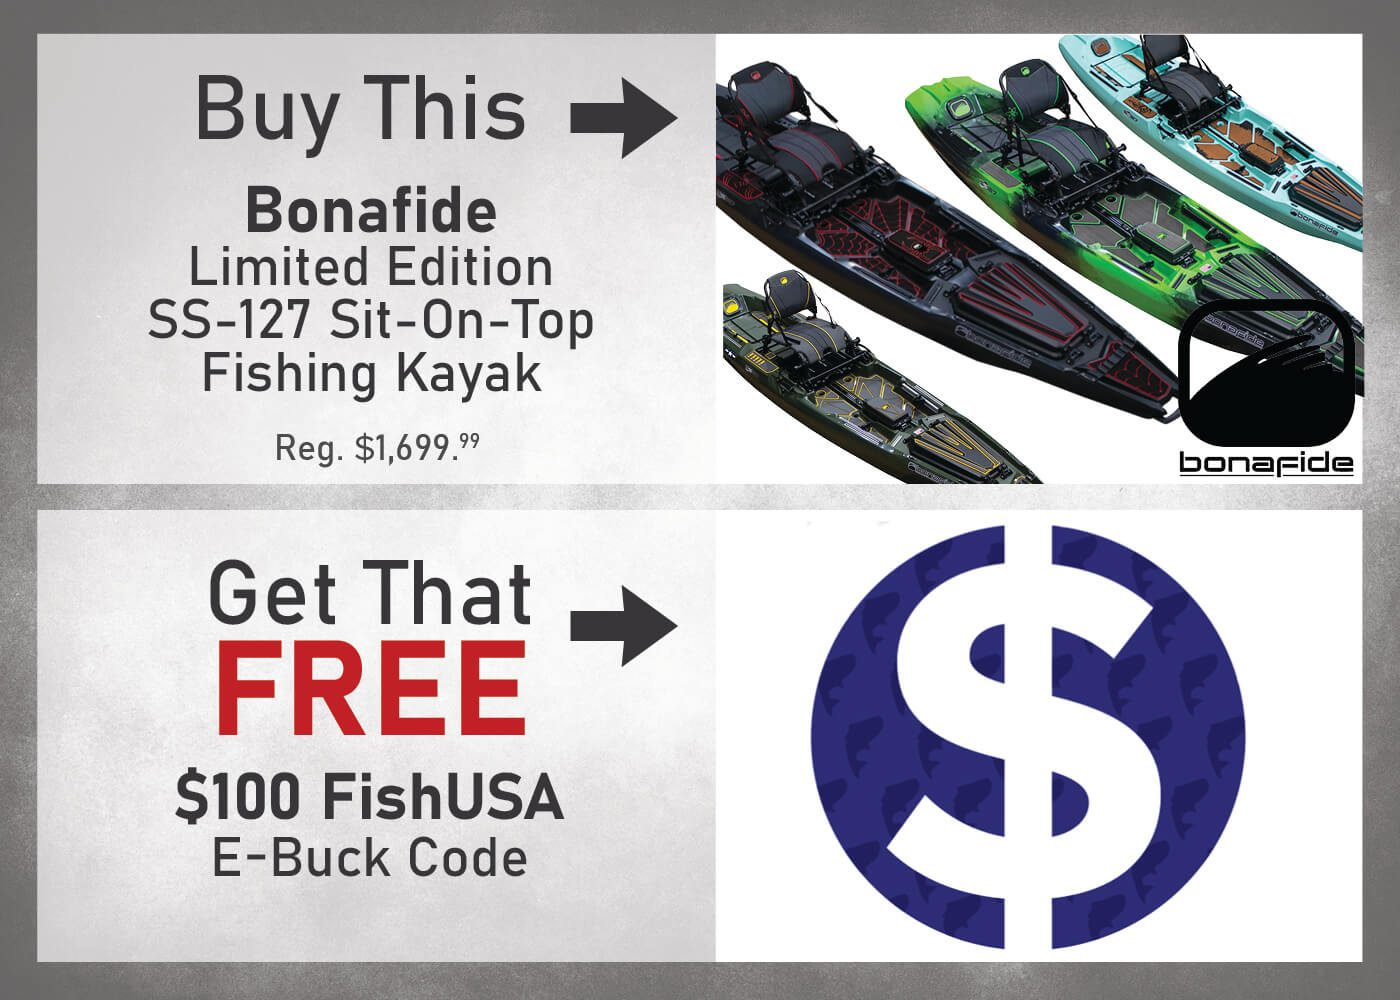 Buy a Bonafide Limited Edition SS-127 Sit-On-Top Fishing Kayak & Get $100 FishUSA E-Buck Code FREE!